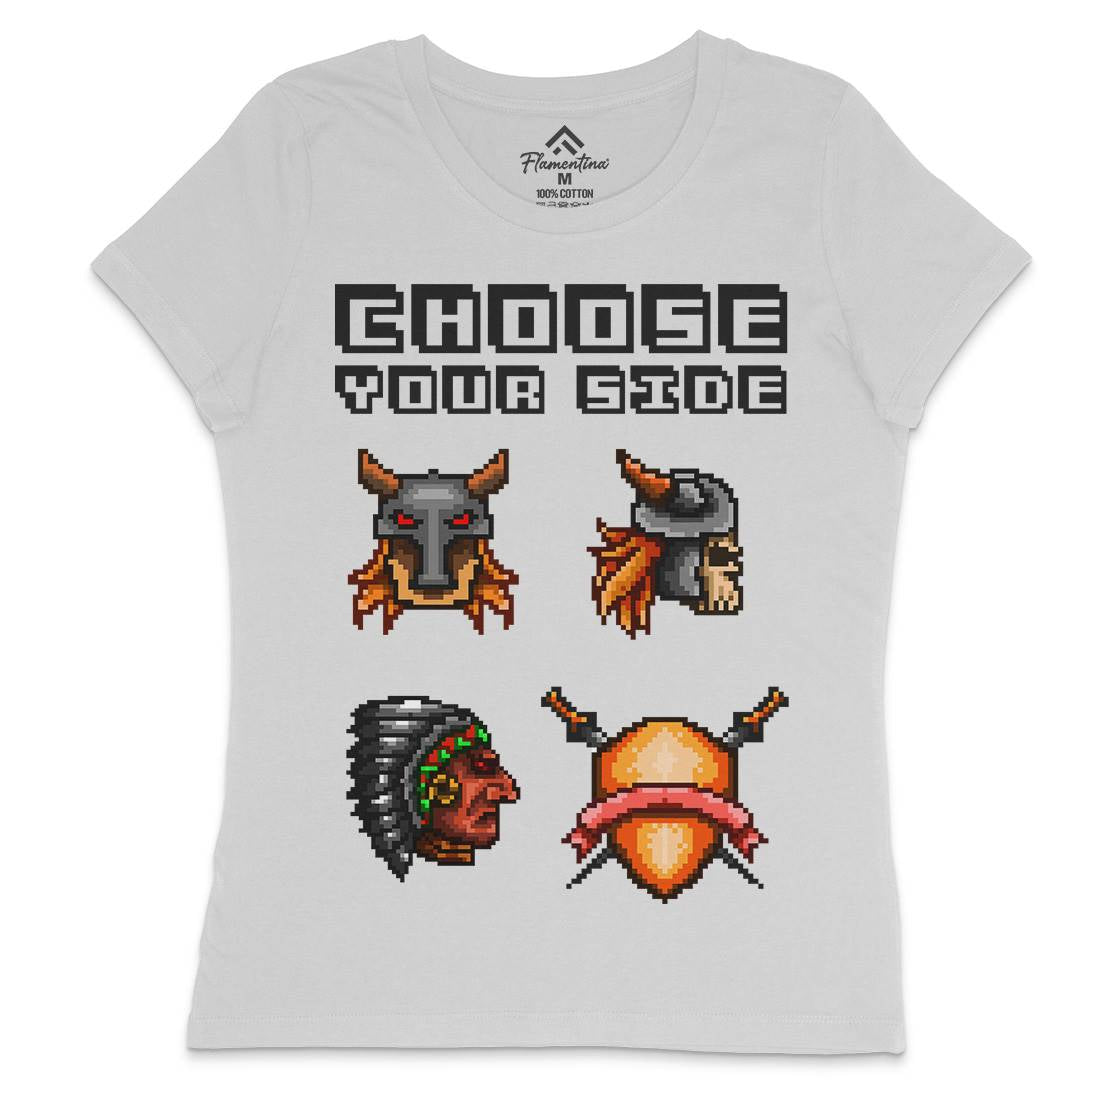 Choose Your Side Womens Crew Neck T-Shirt Geek B890